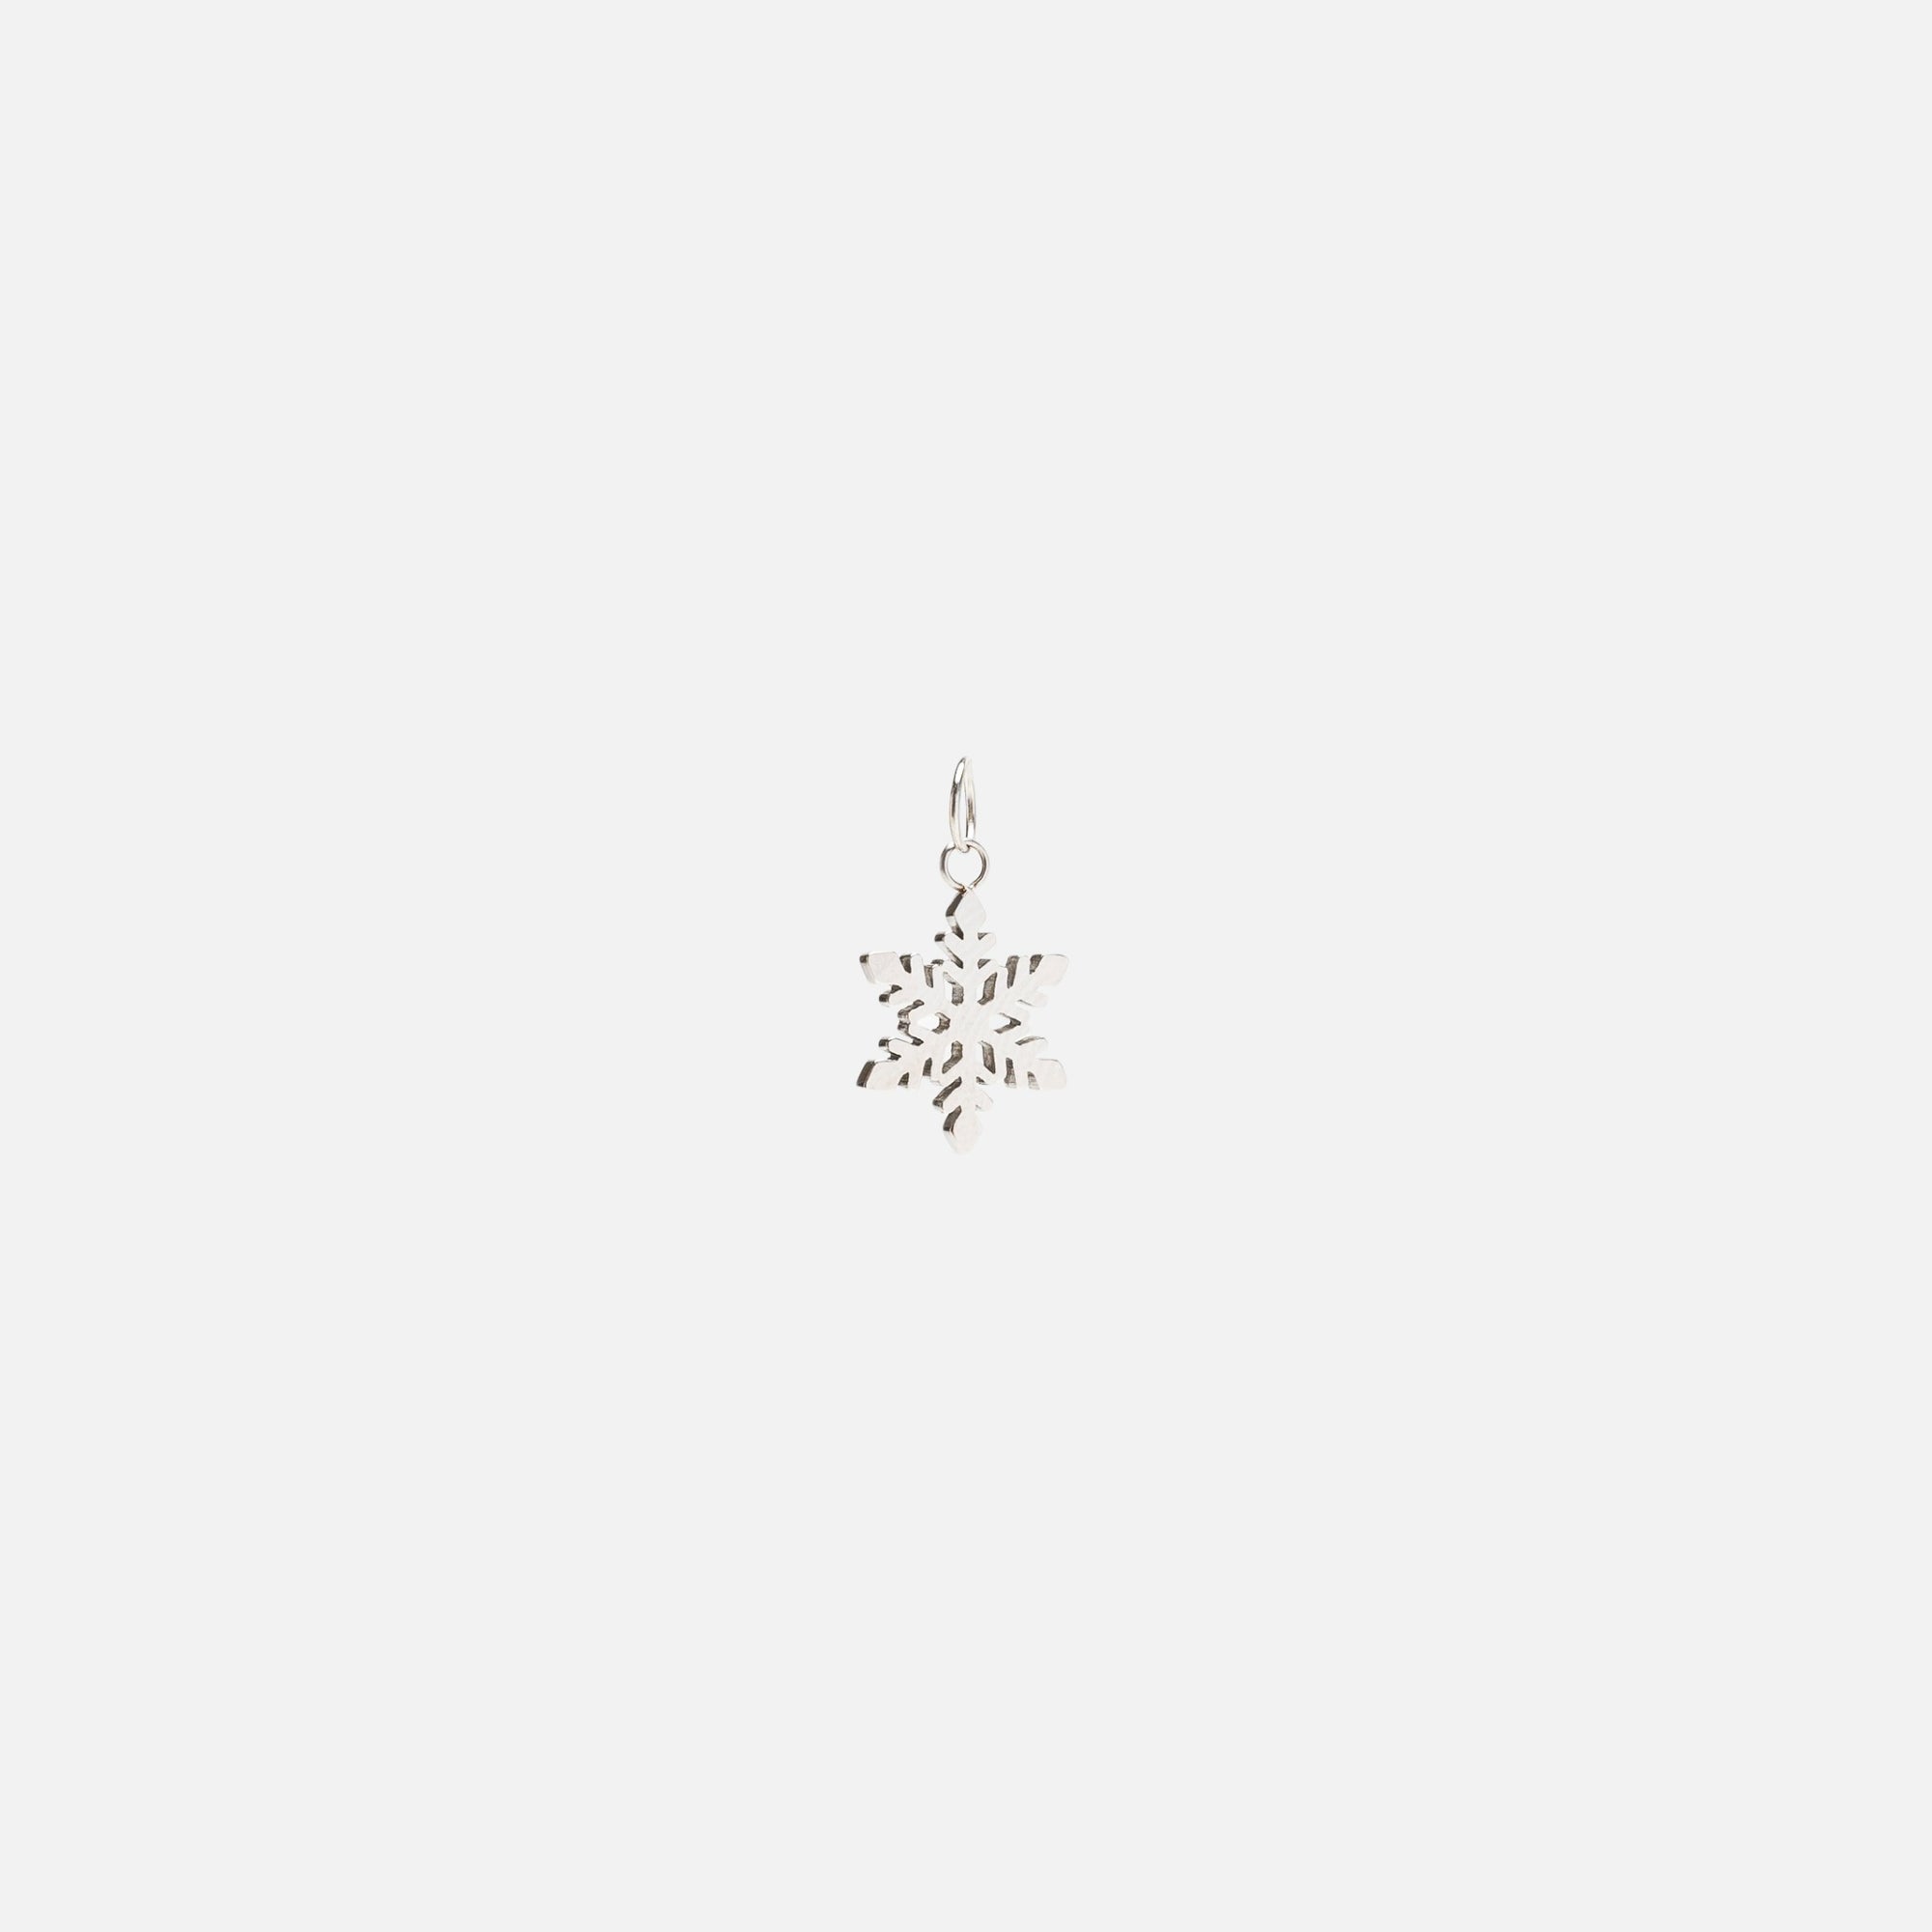 Small silver snowflake charm